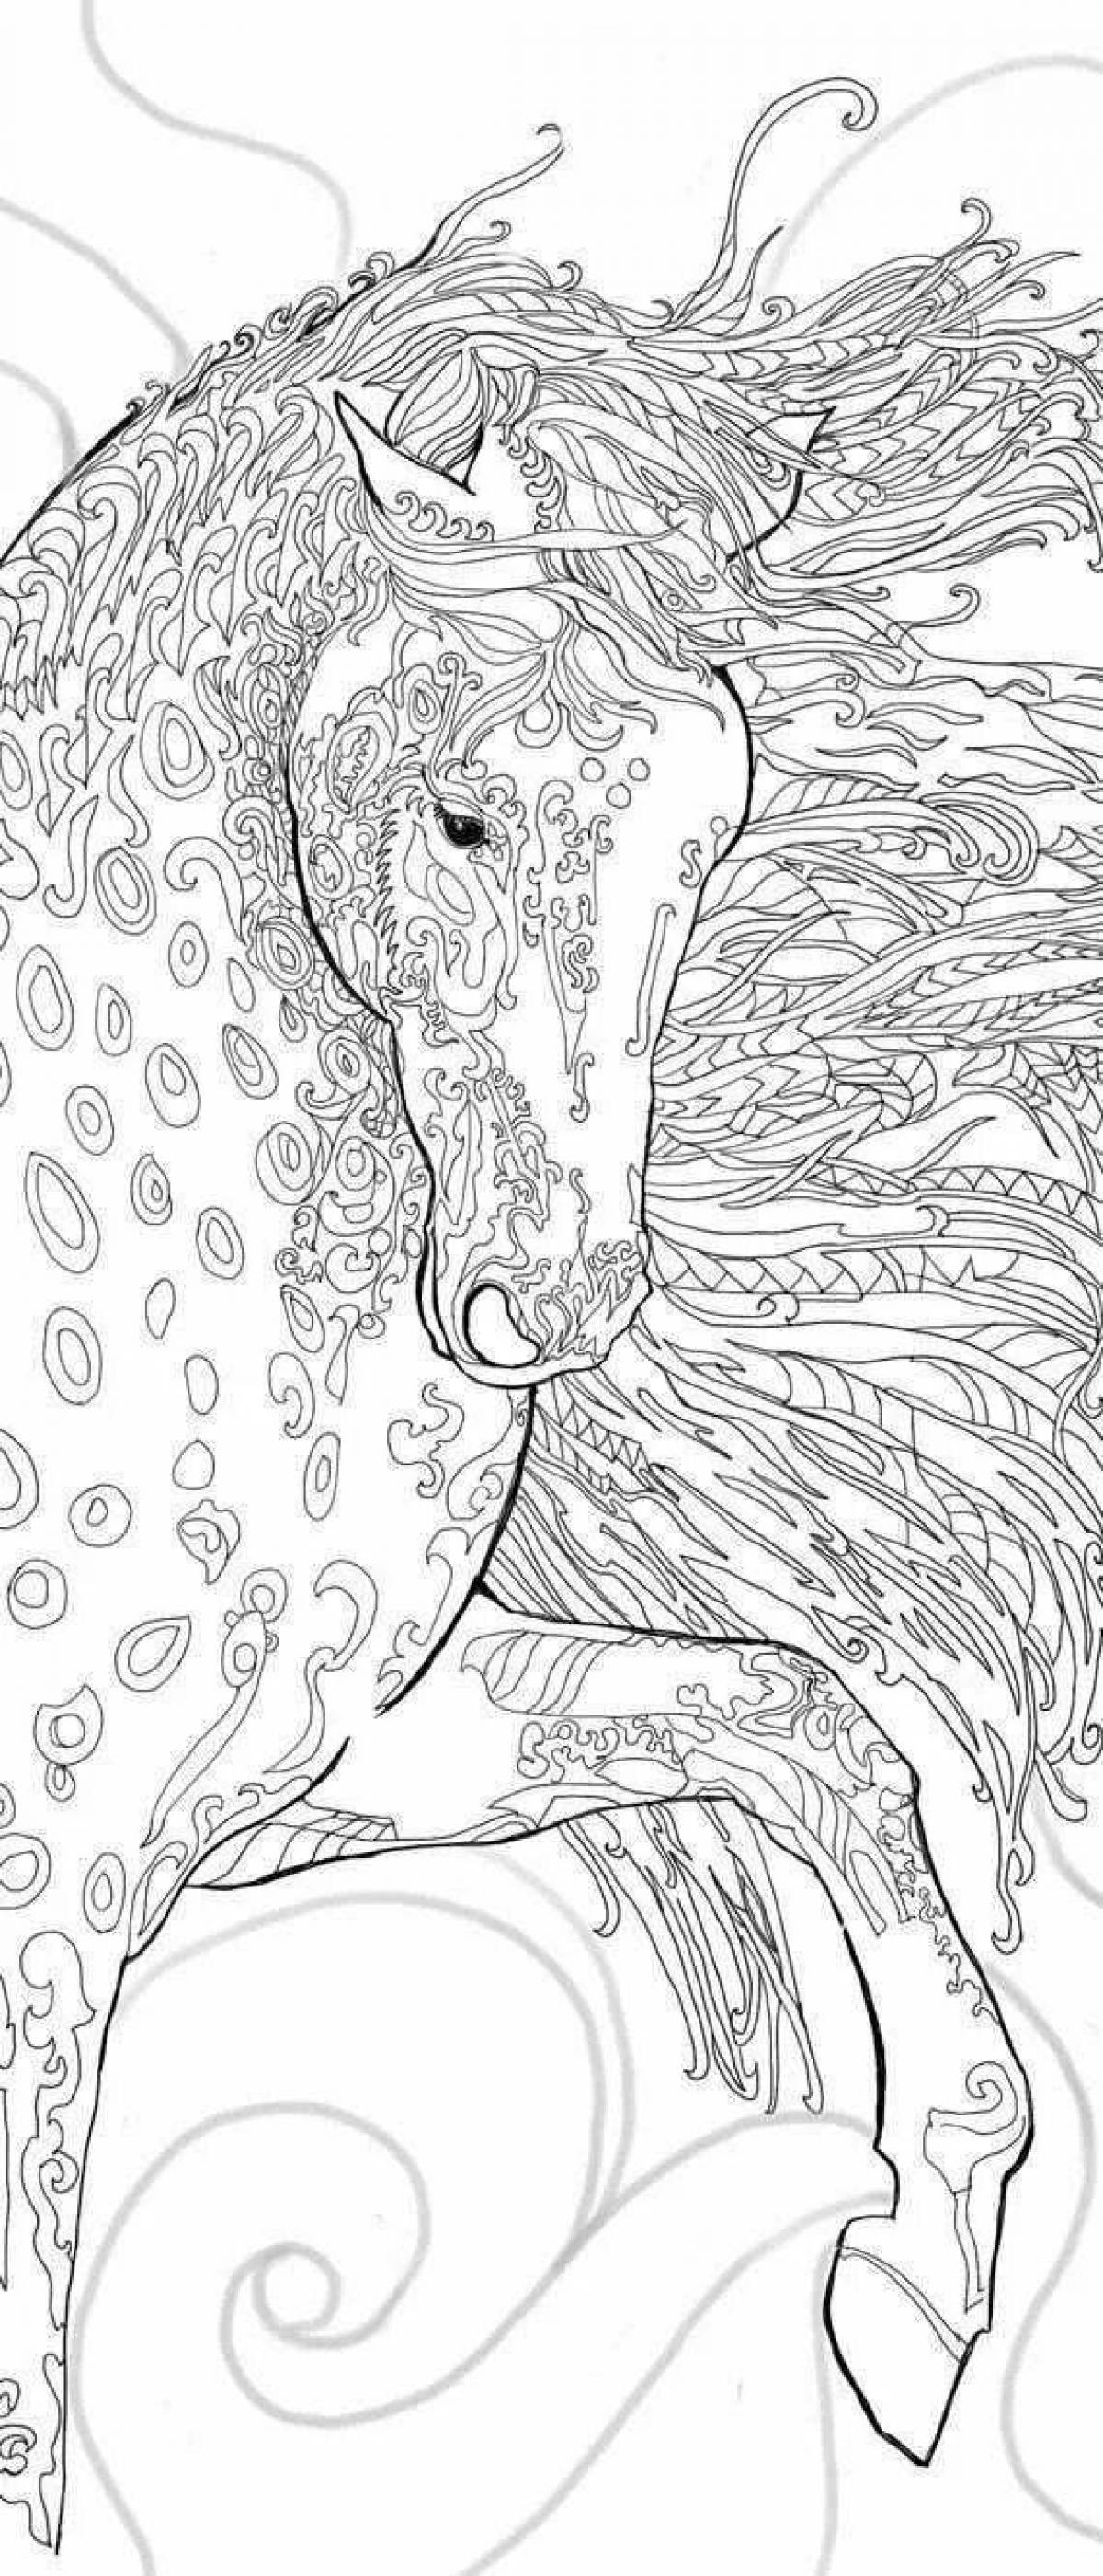 Буйная раскраска сложная лошадь